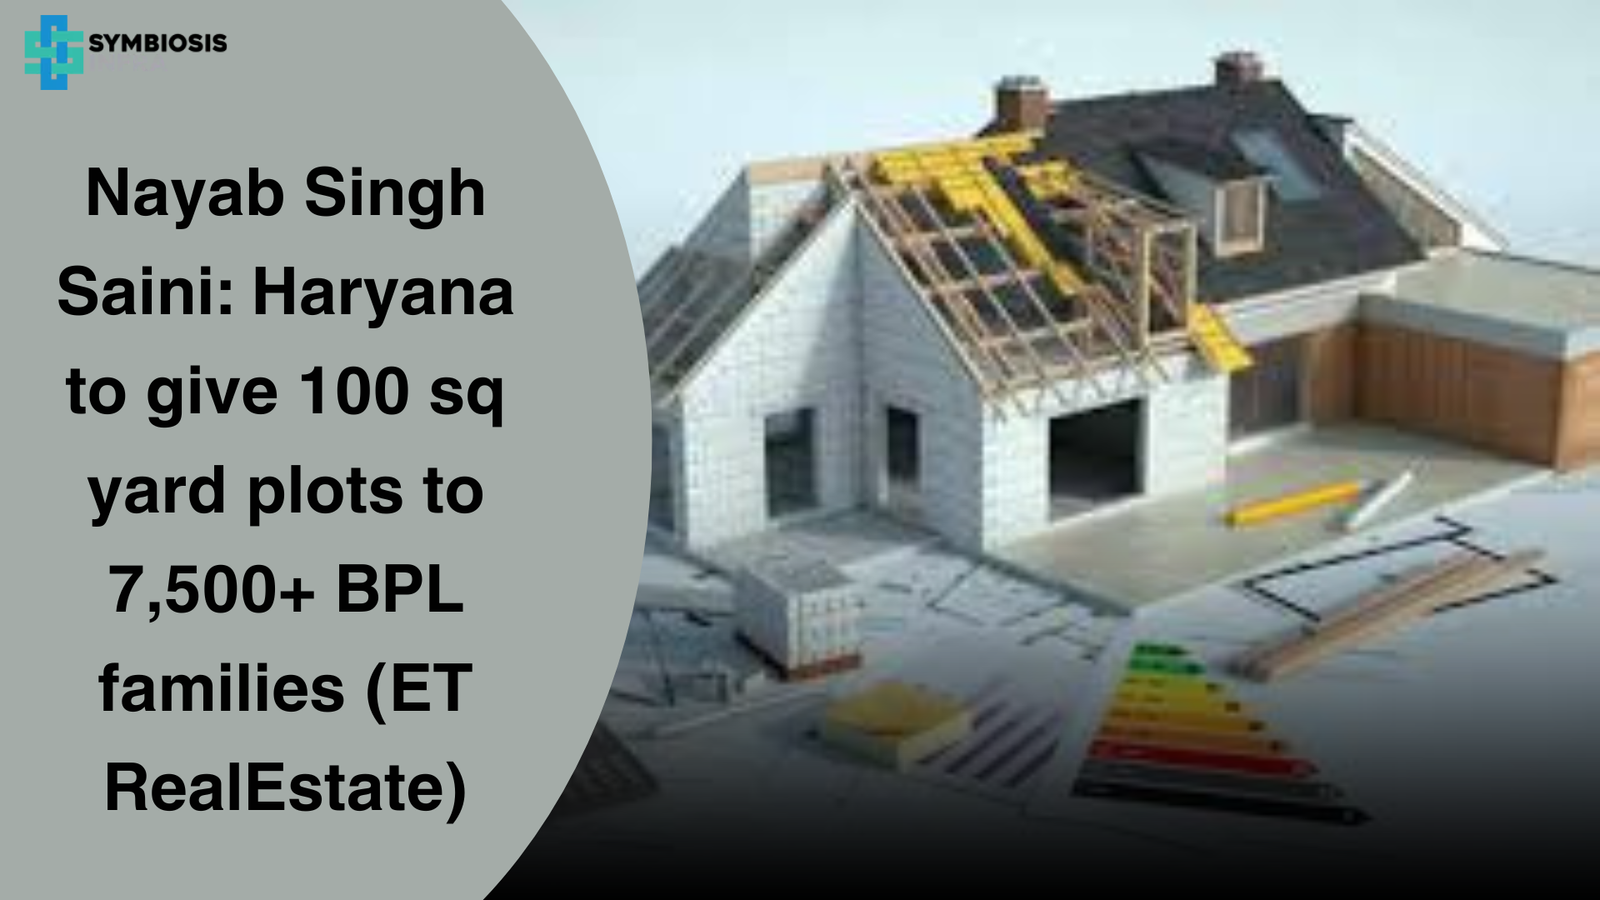 Nayab Singh Saini: Haryana to give 100 sq yard plots to 7,500+ BPL families (ET RealEstate)